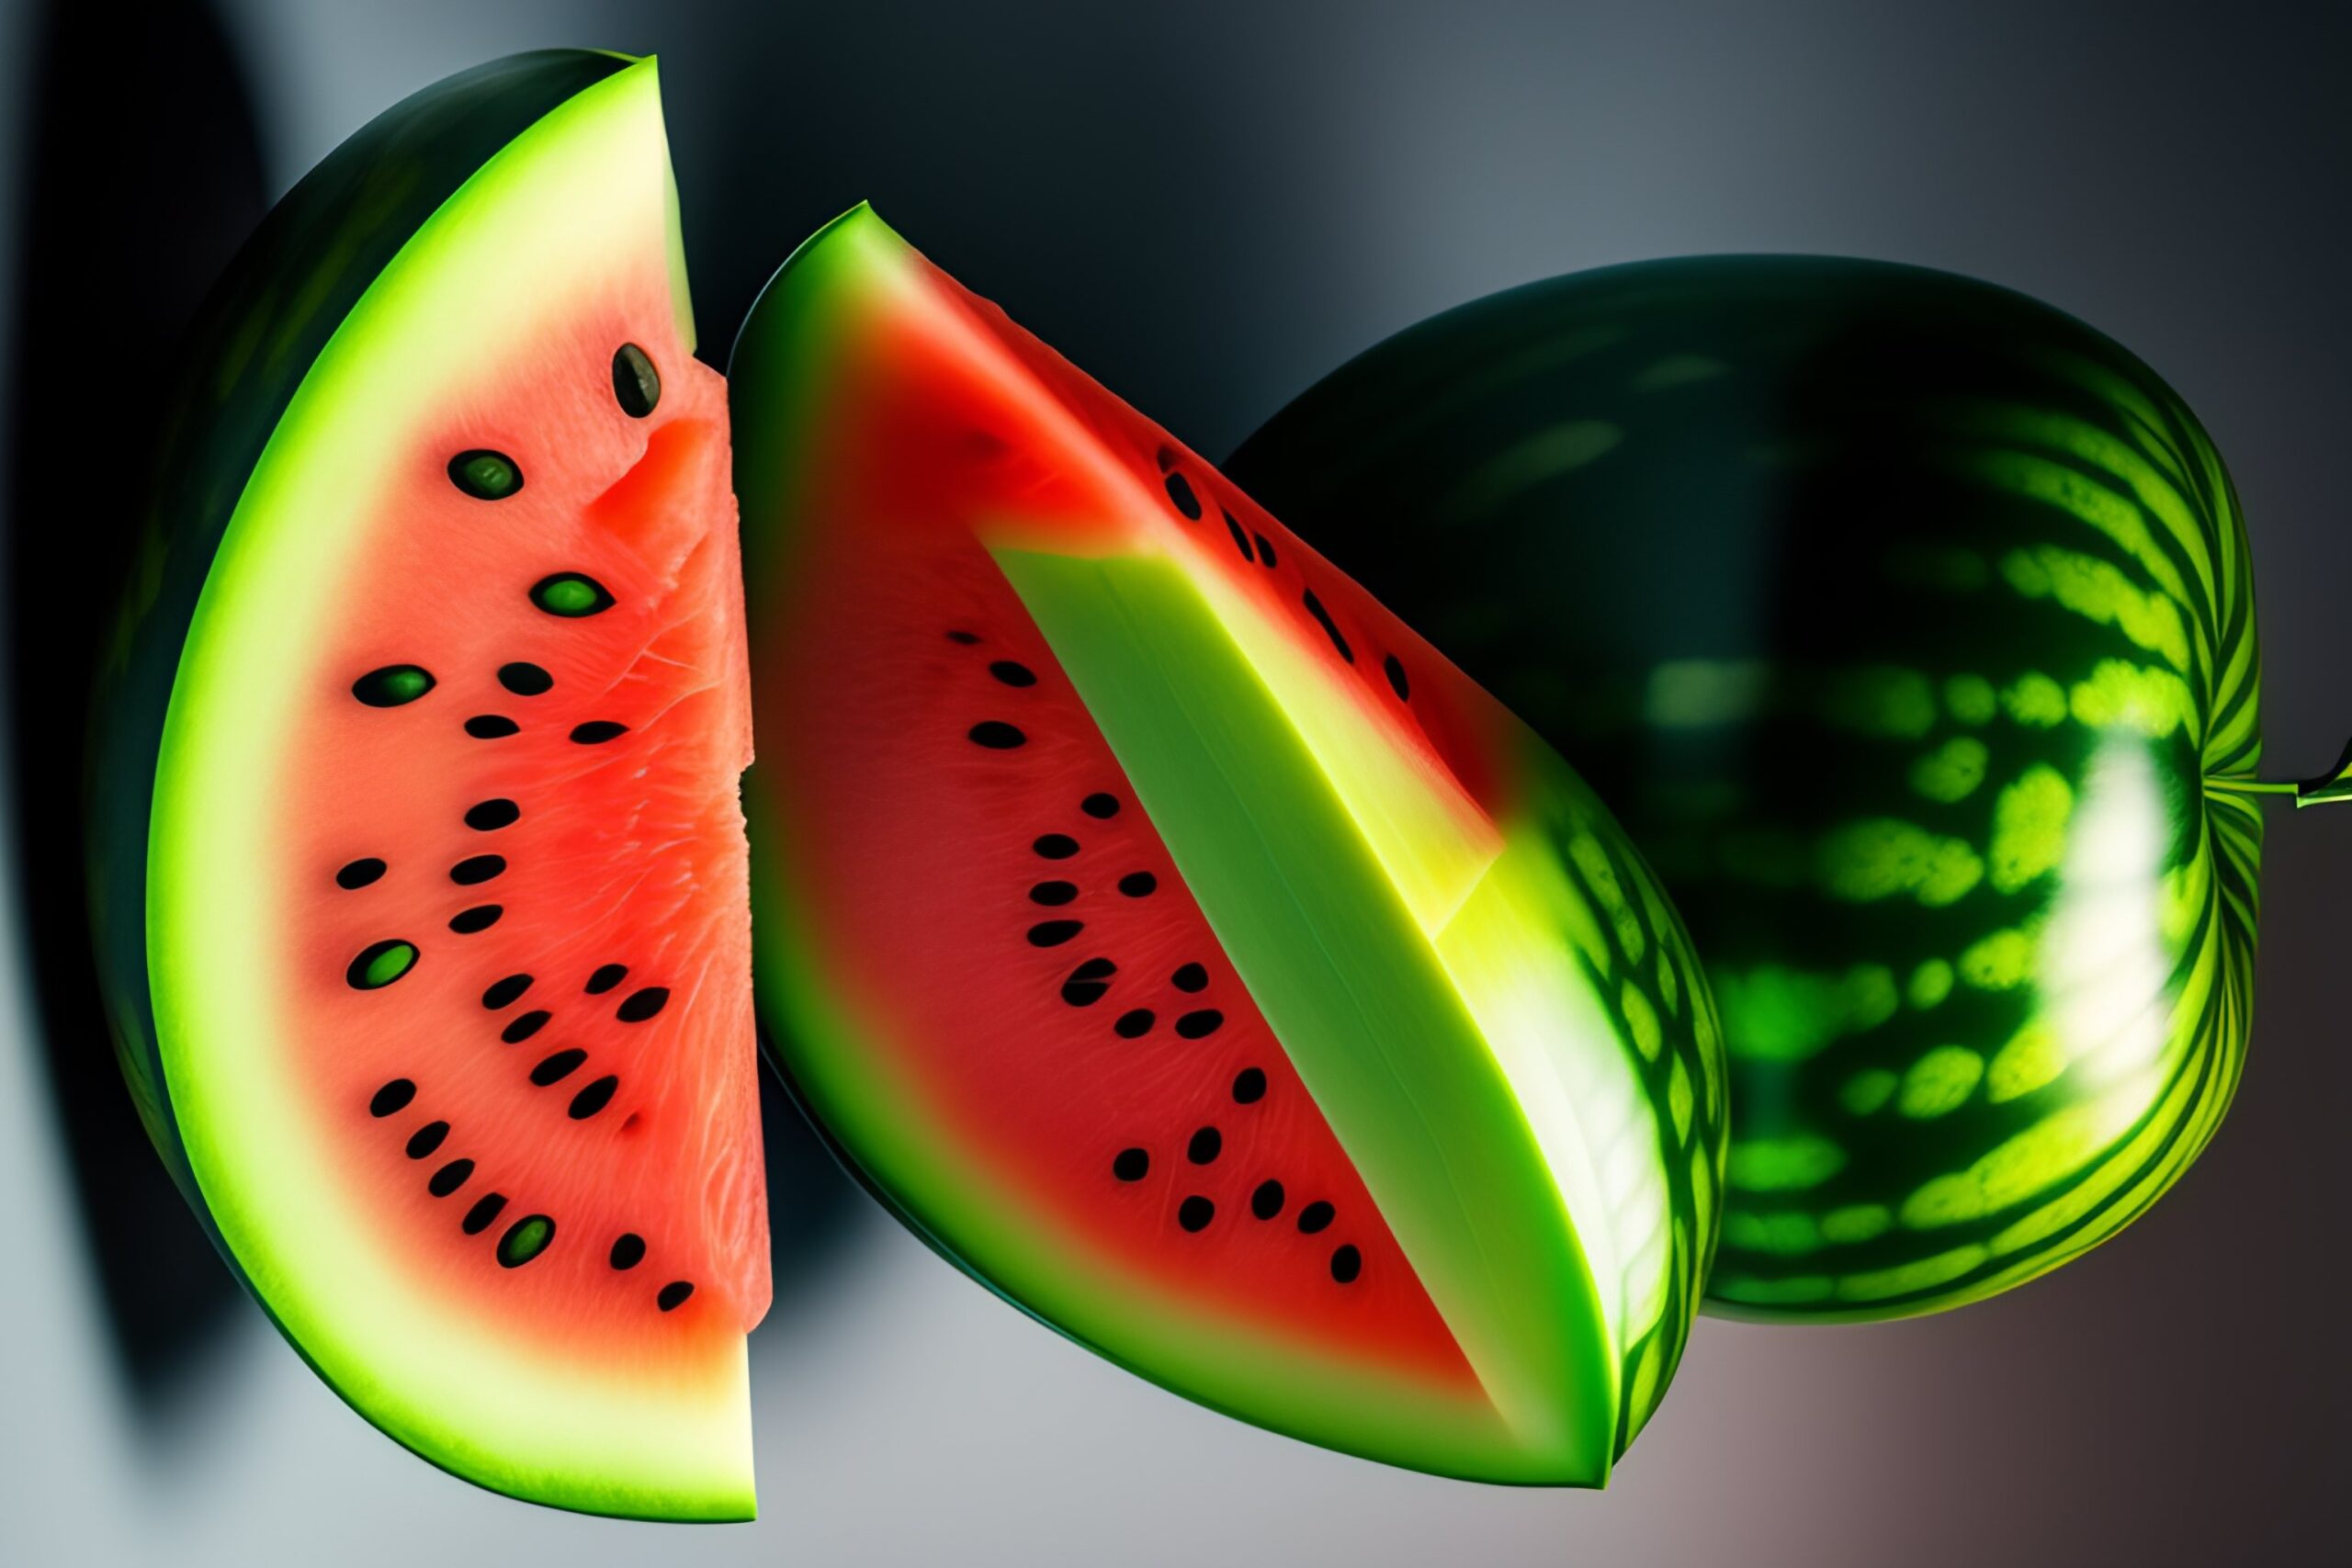 futuristic machine that turns watermelons into ele